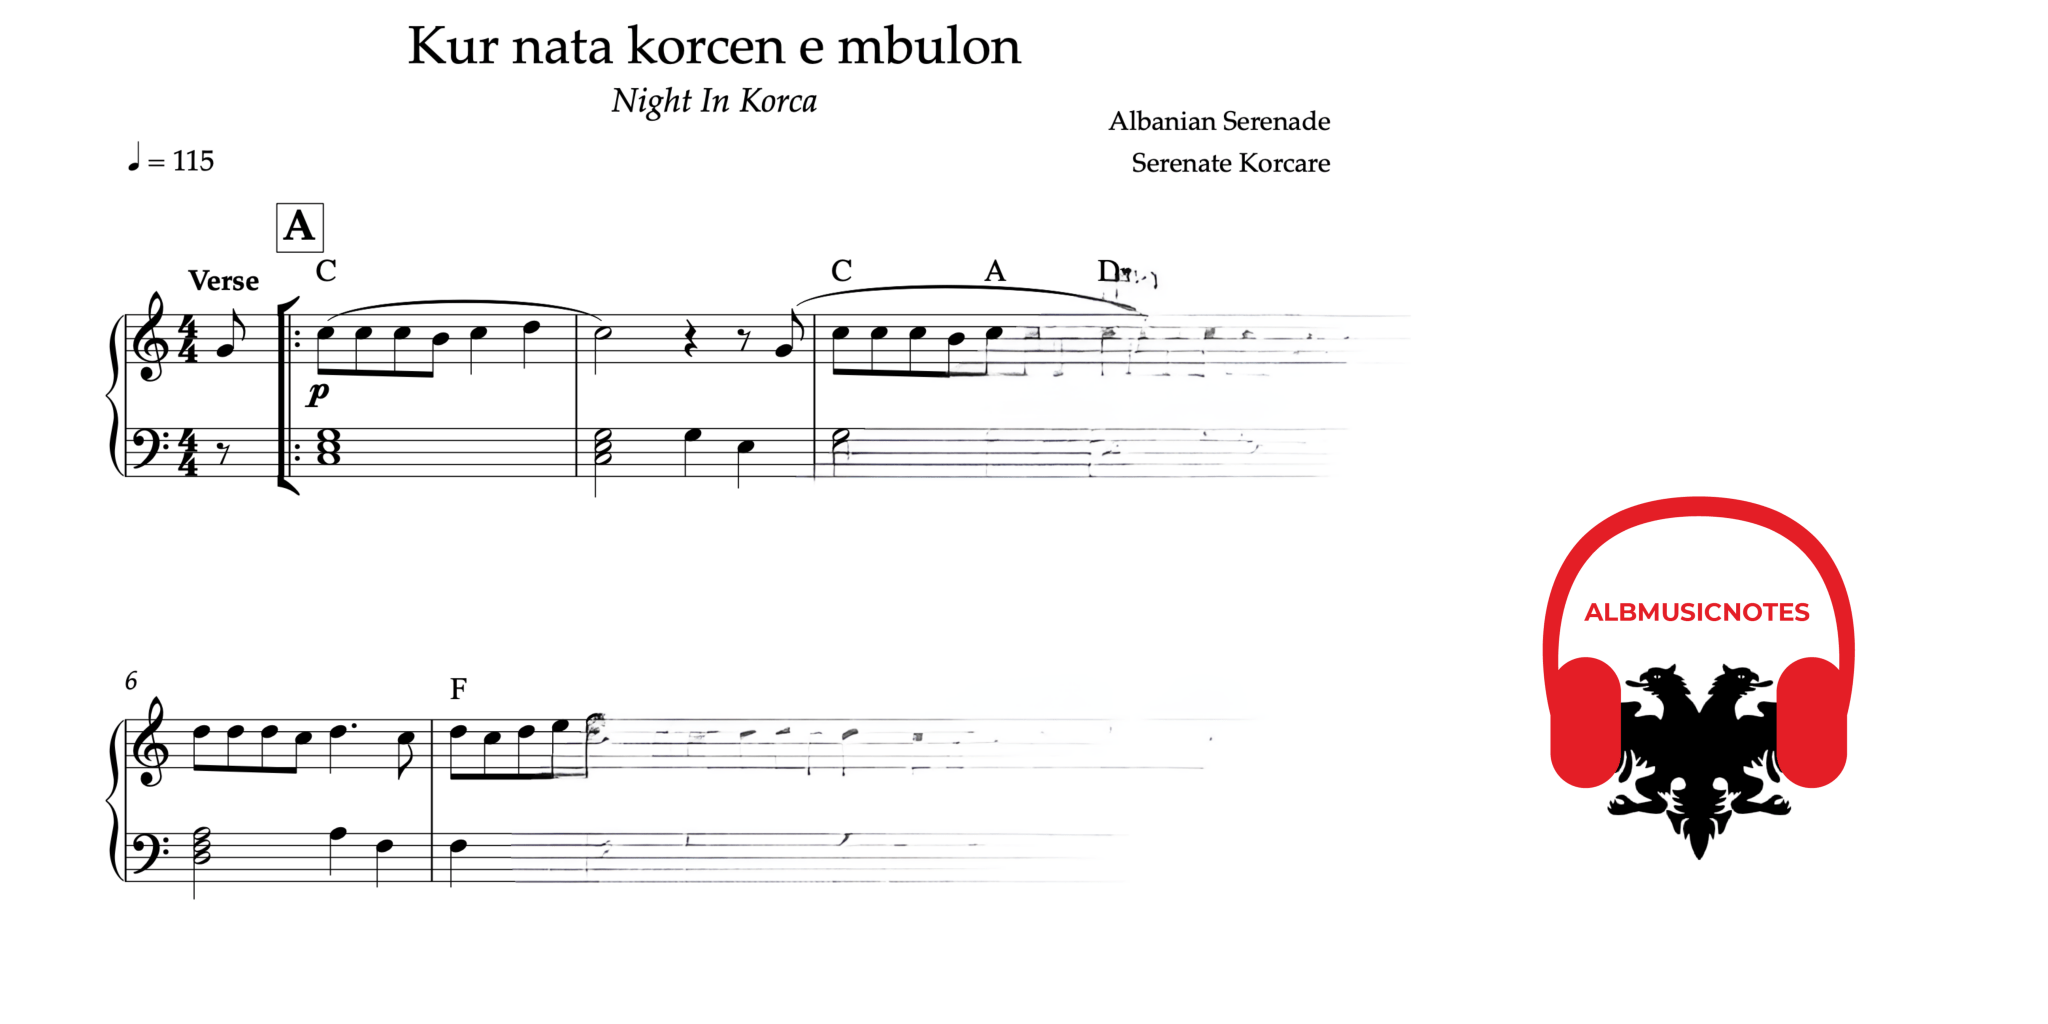 Kur nata Korcen e mbulon, Piano sheet + Chords - Alb Music Notes